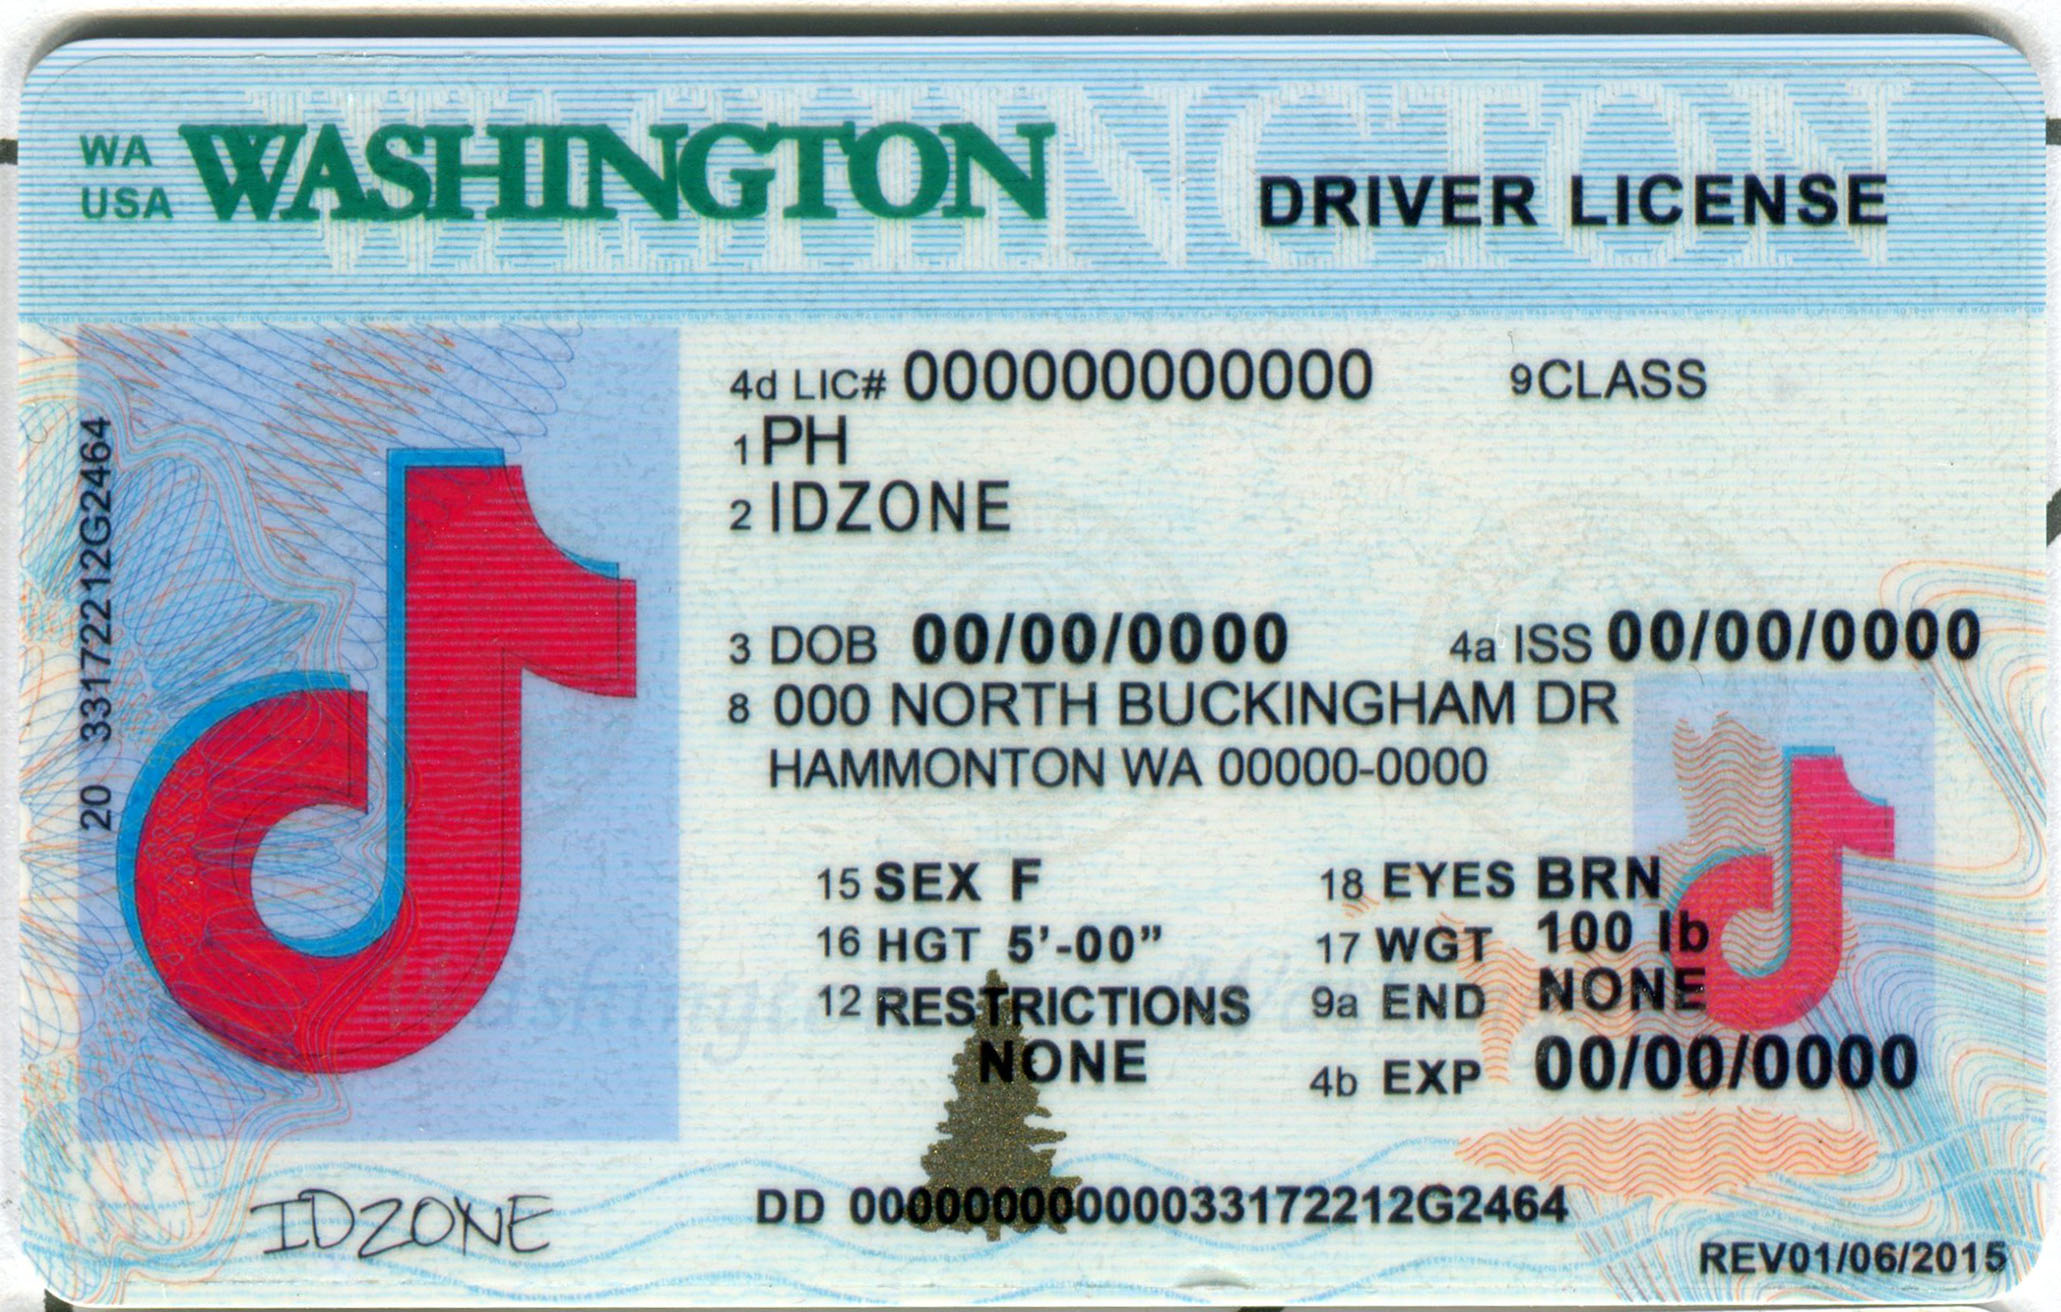 WASHINGTON-New buy fake id